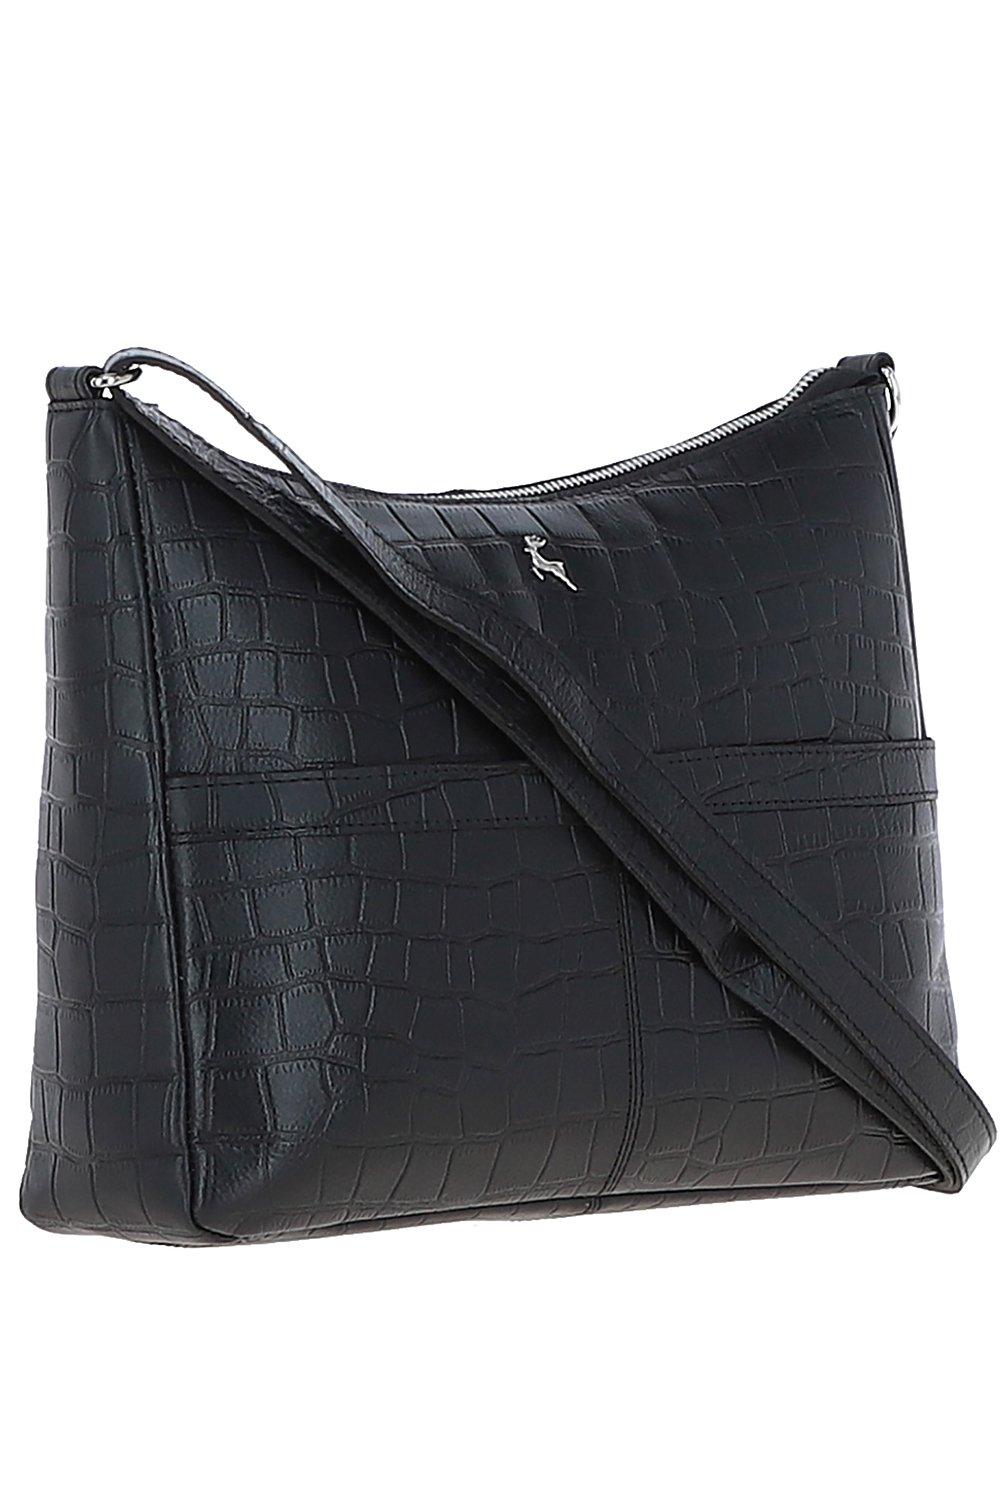 Ashwood Cognac Leather Croc Cross-Body Bag